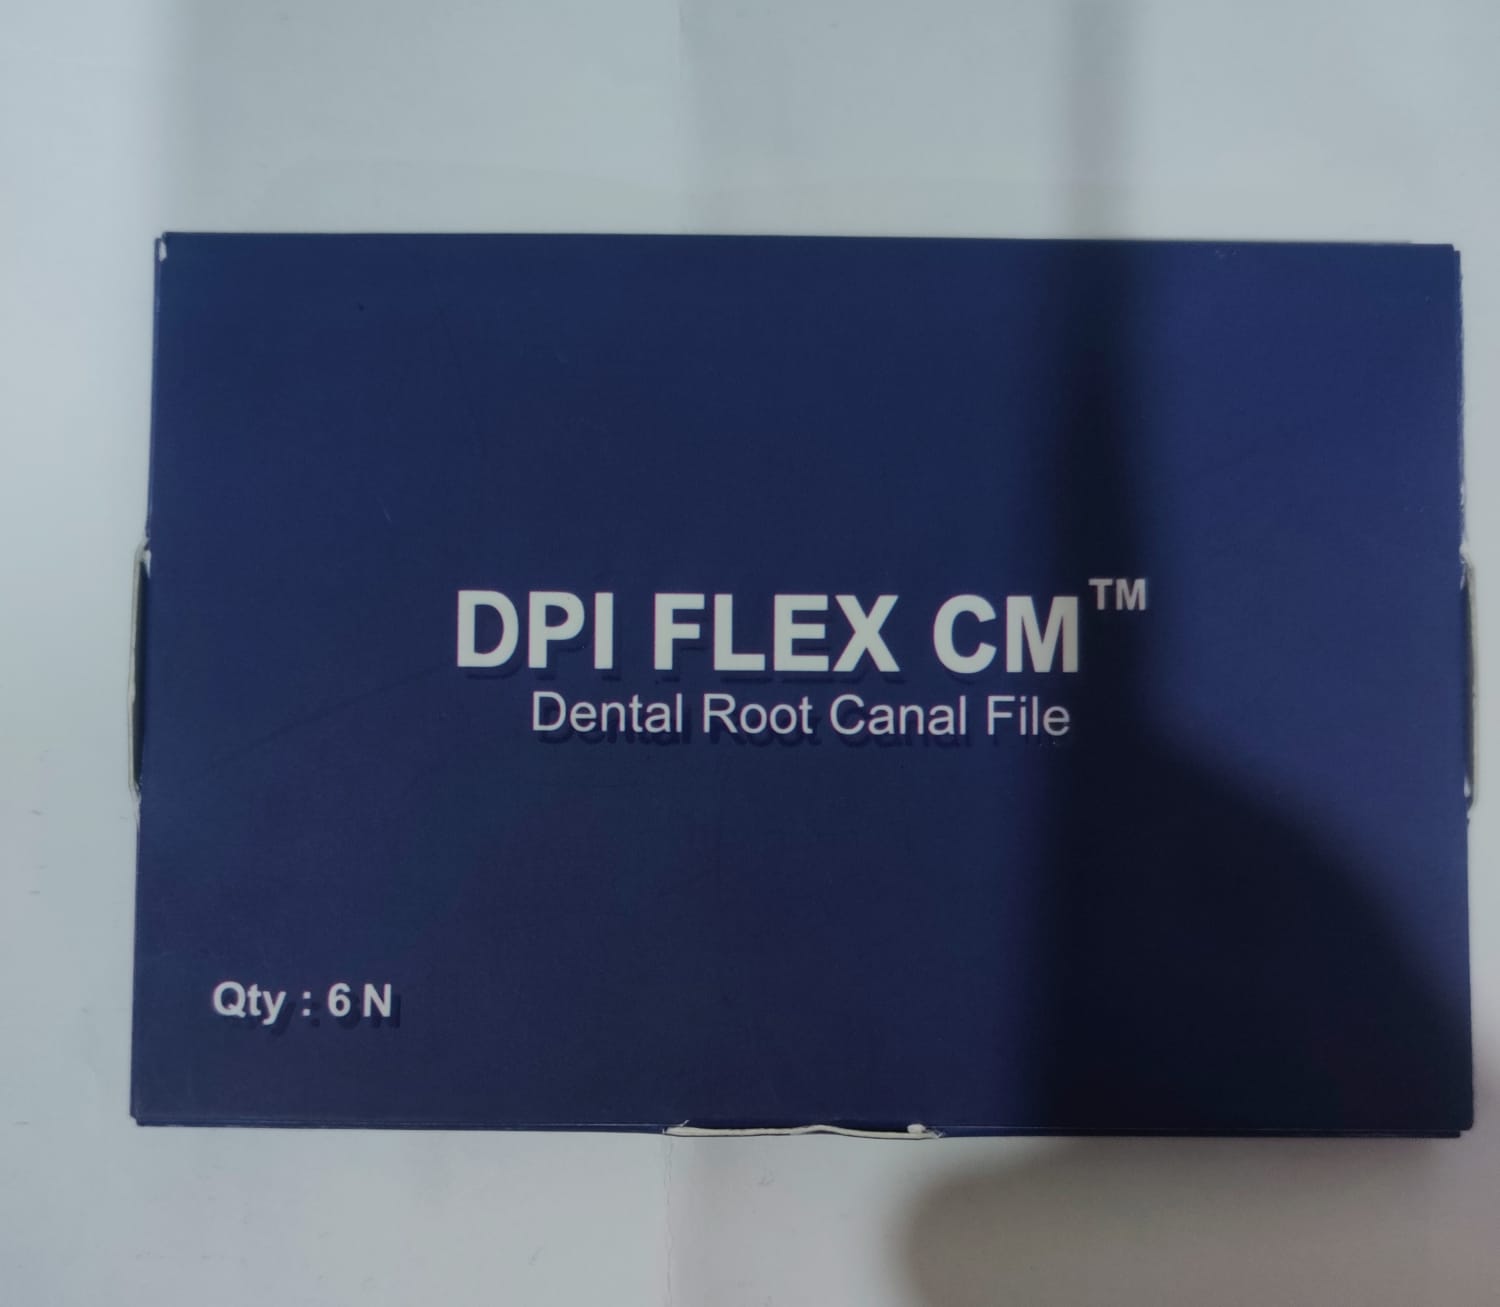 DPI FLEX CM-OP-DP4 25MM